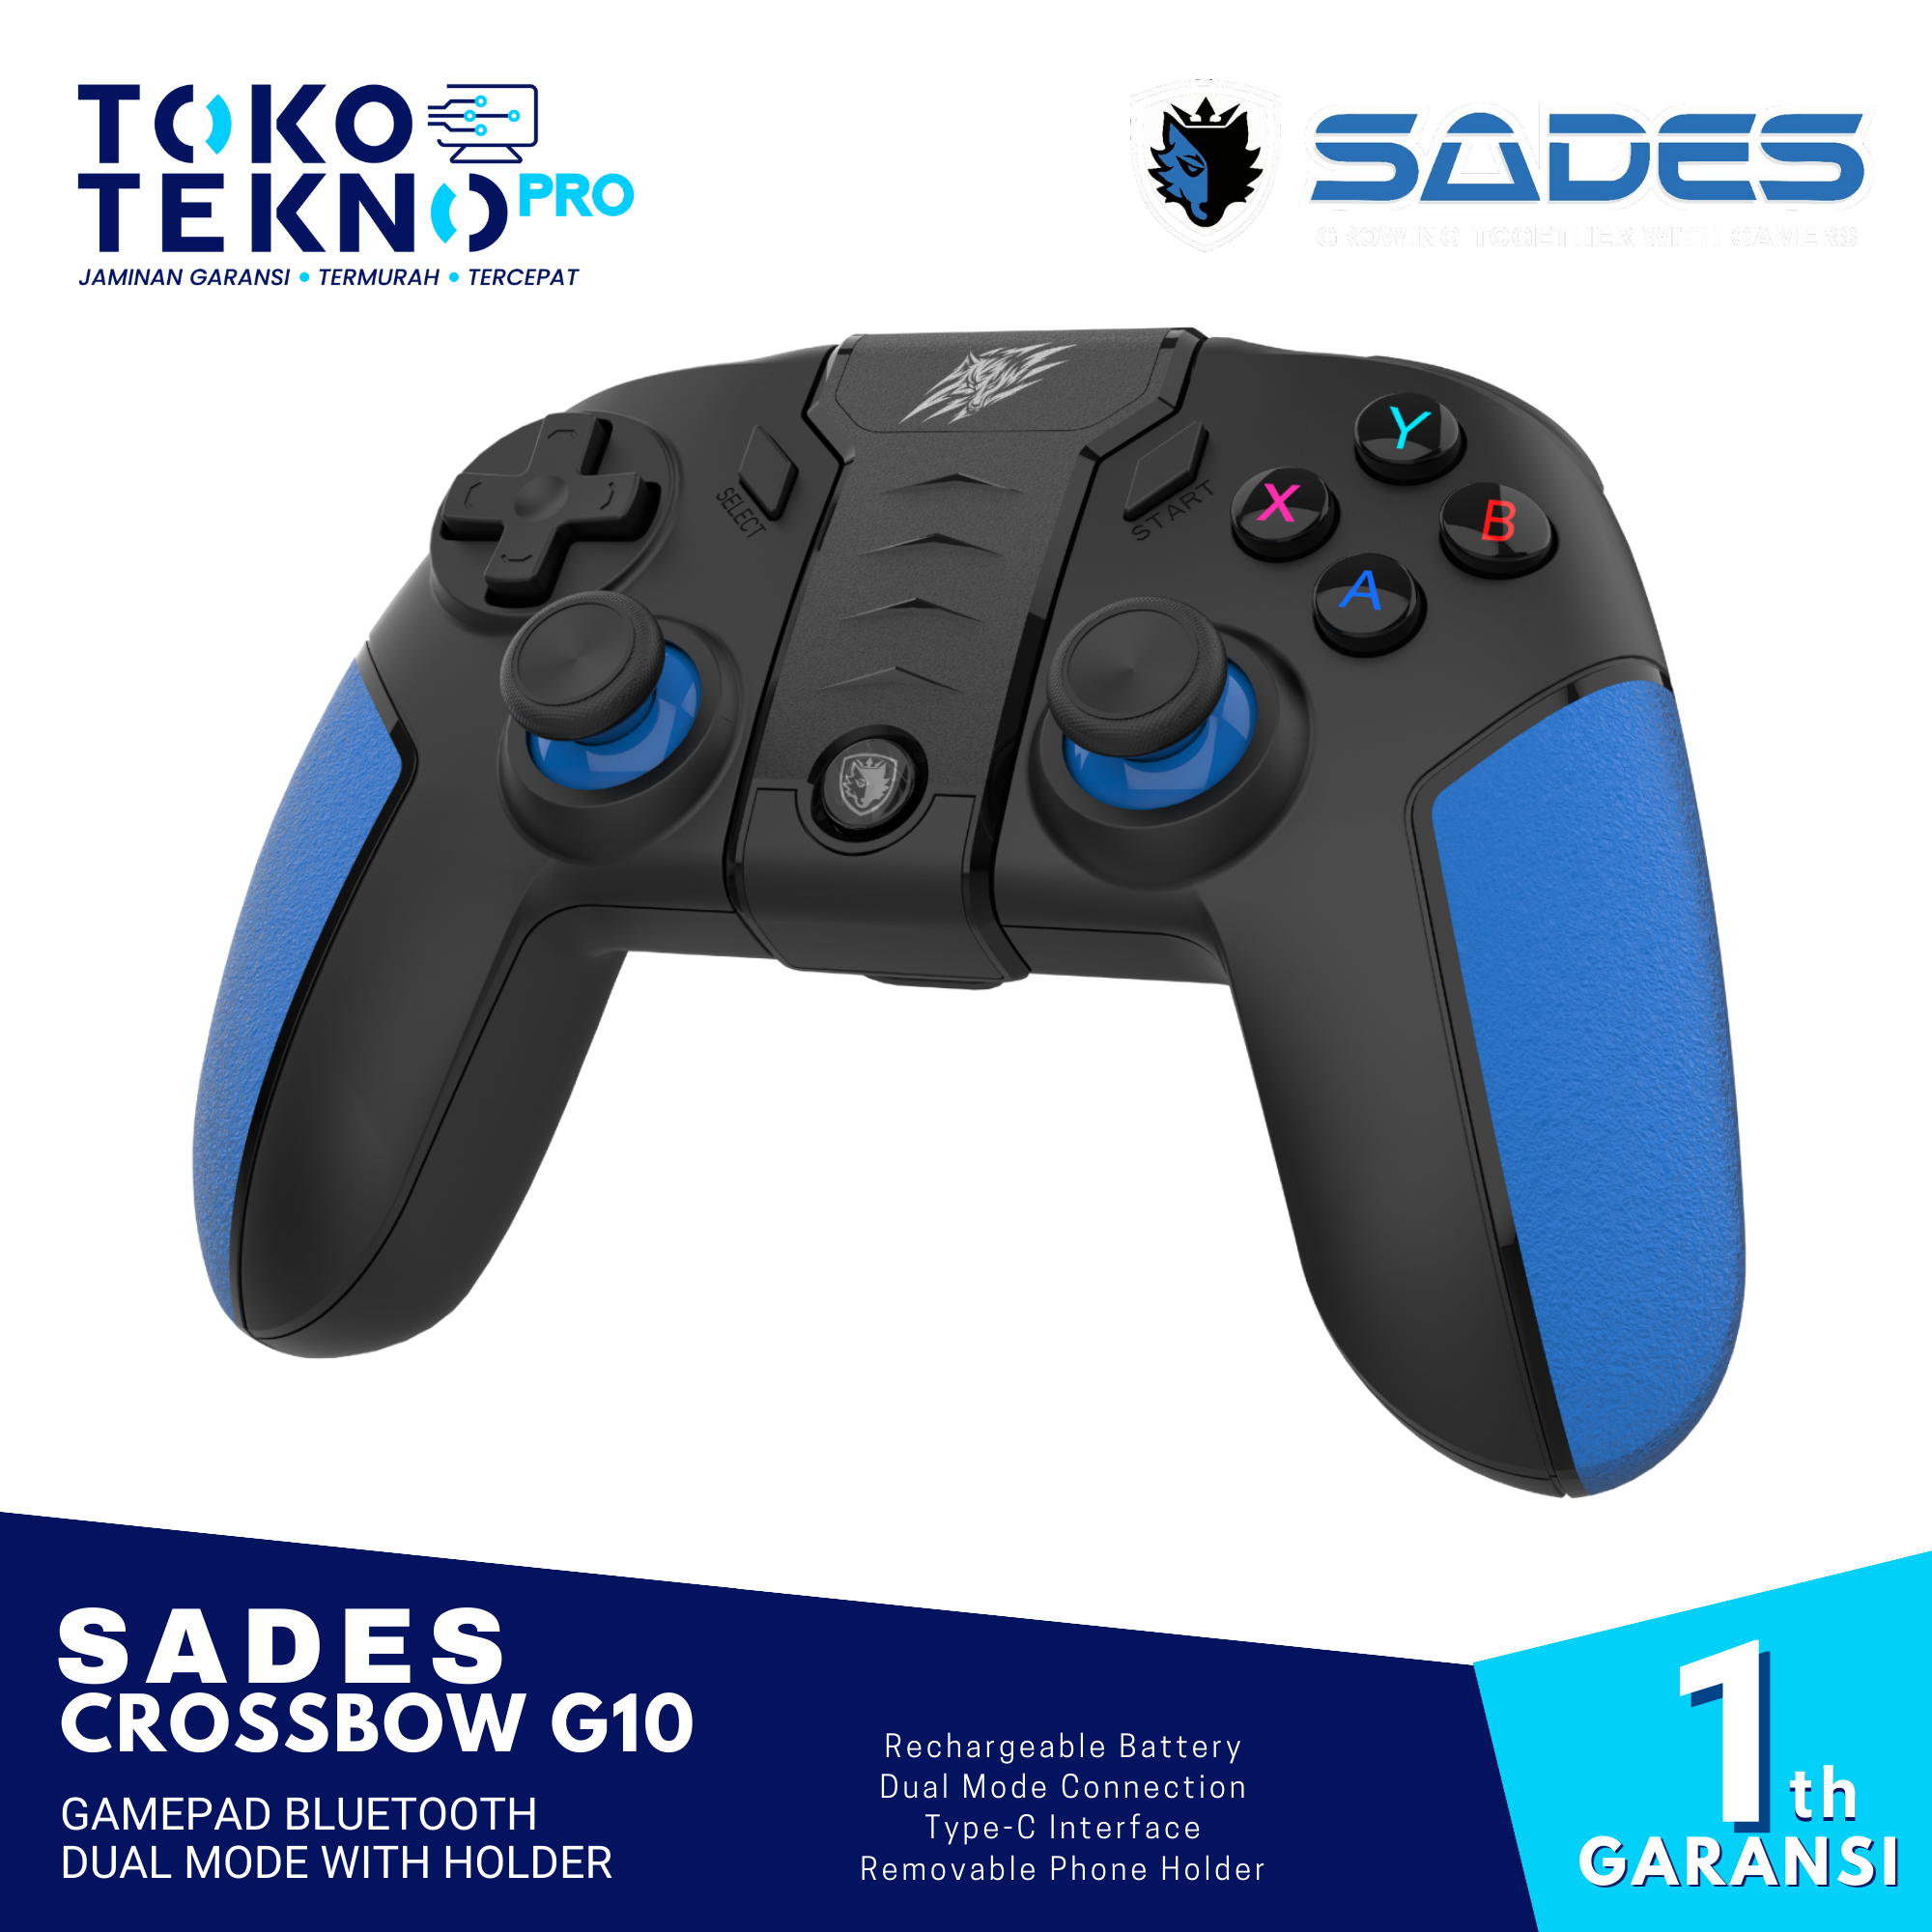 Sades Crossbow G10 / G-10 Gamepad Bluetooth Dual Mode with Holder